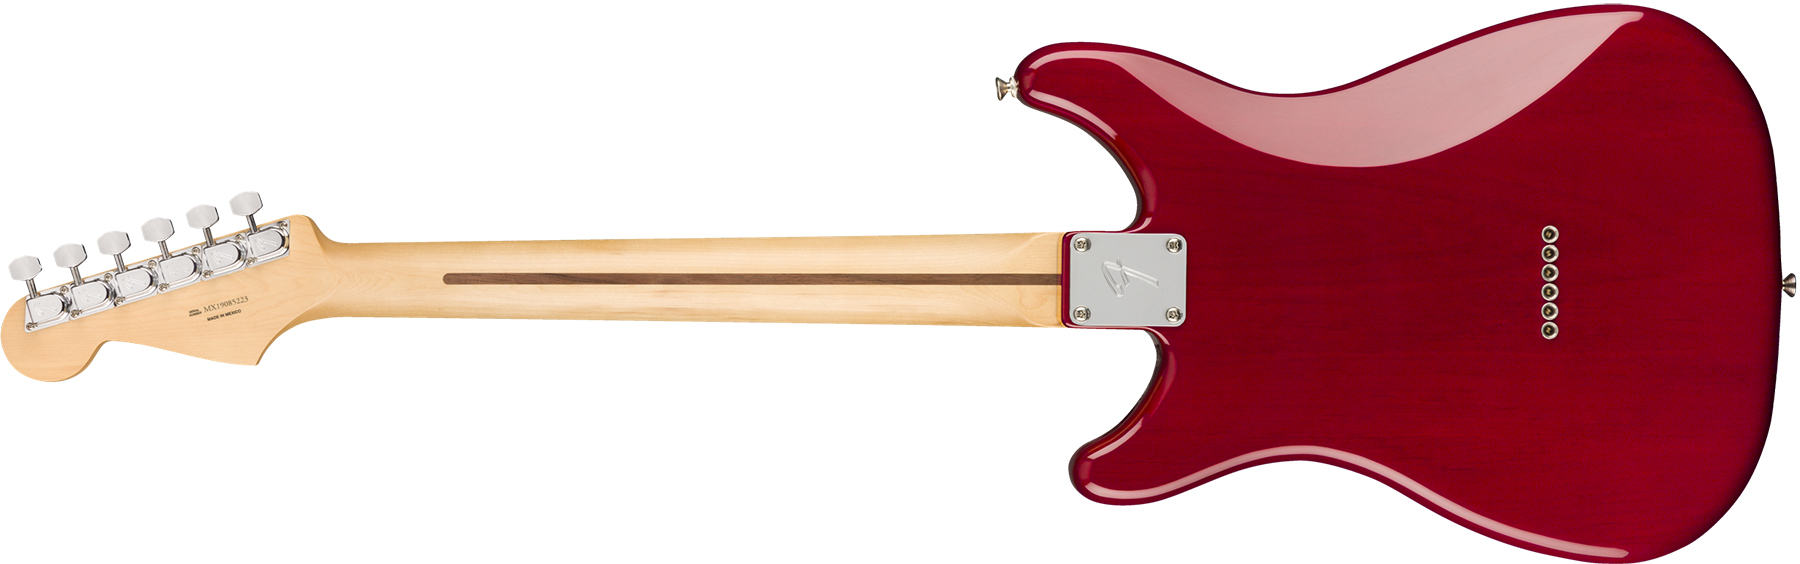 Fender Lead Ii Player Mex Ss Ht Pf - Crimson Red Transparent - Guitare Électrique Forme Str - Variation 1